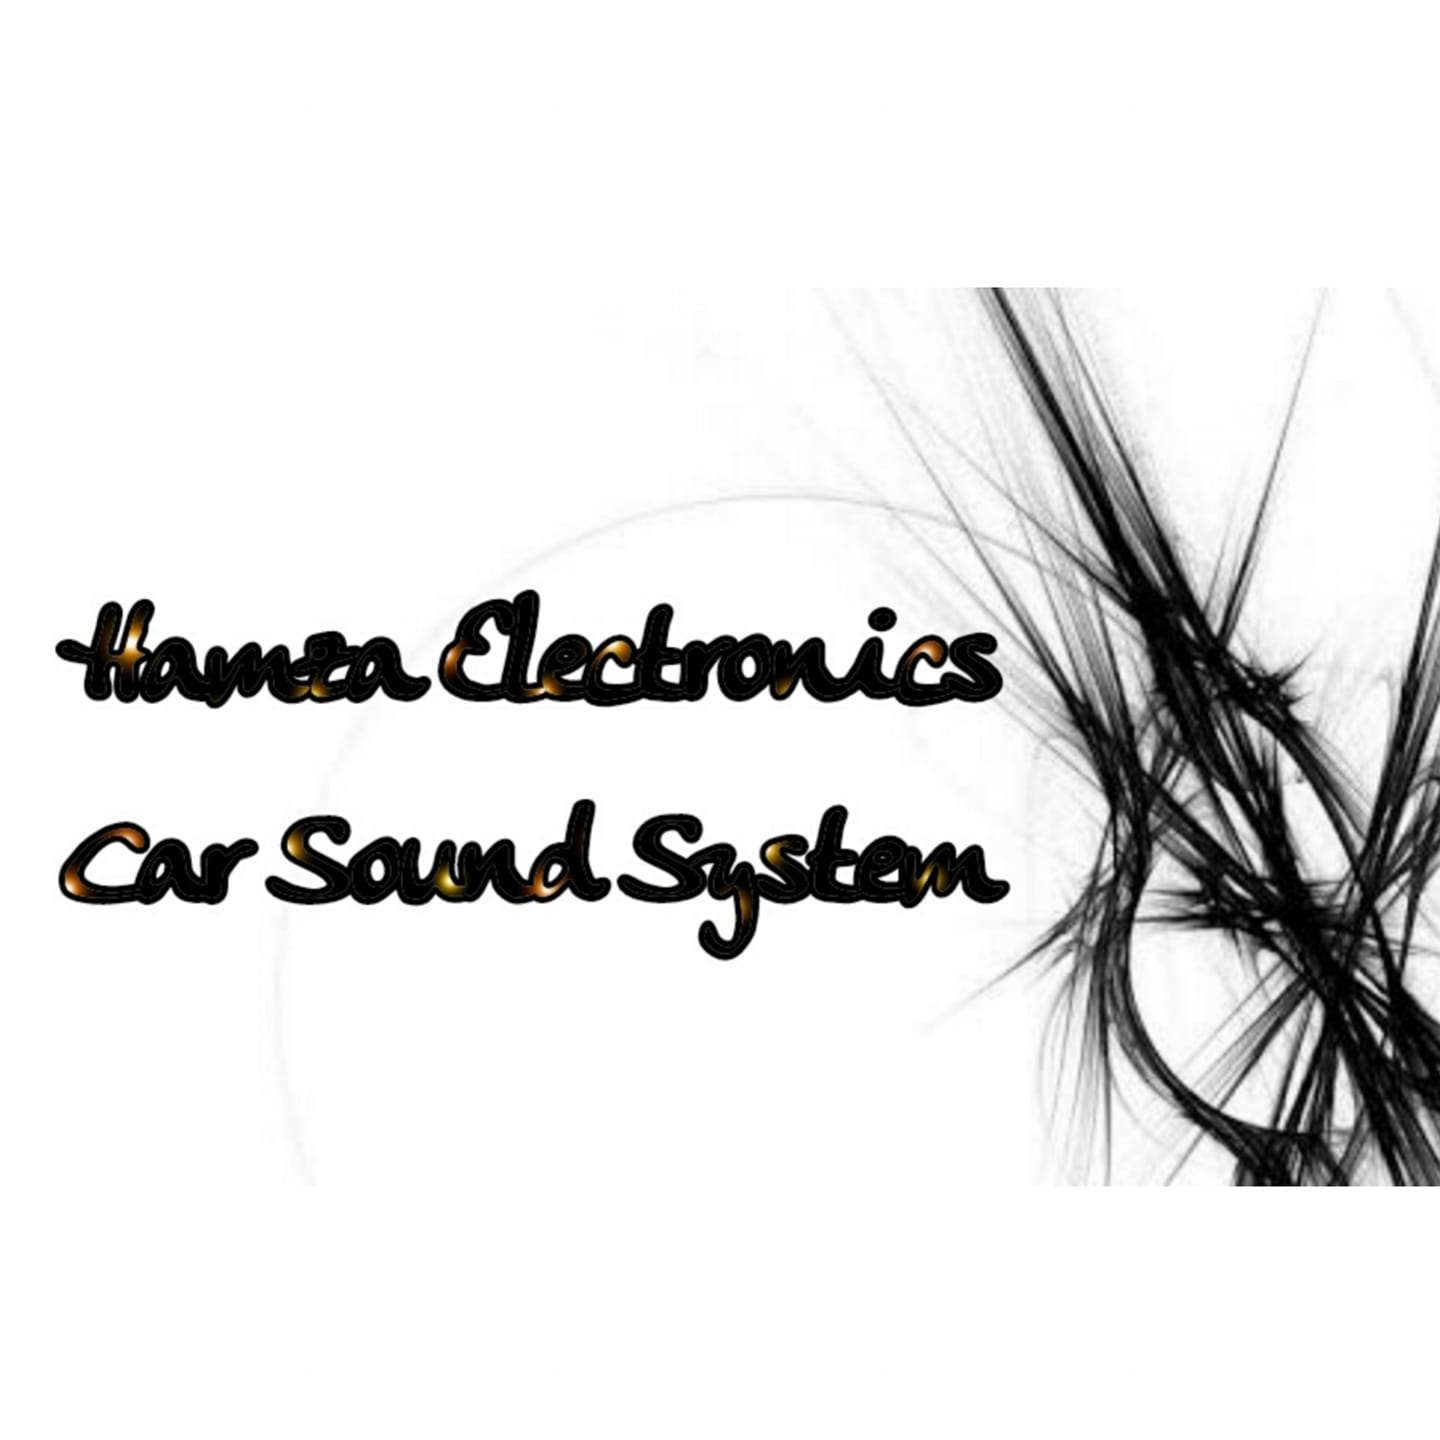 Hamza Electronics Car Sound System